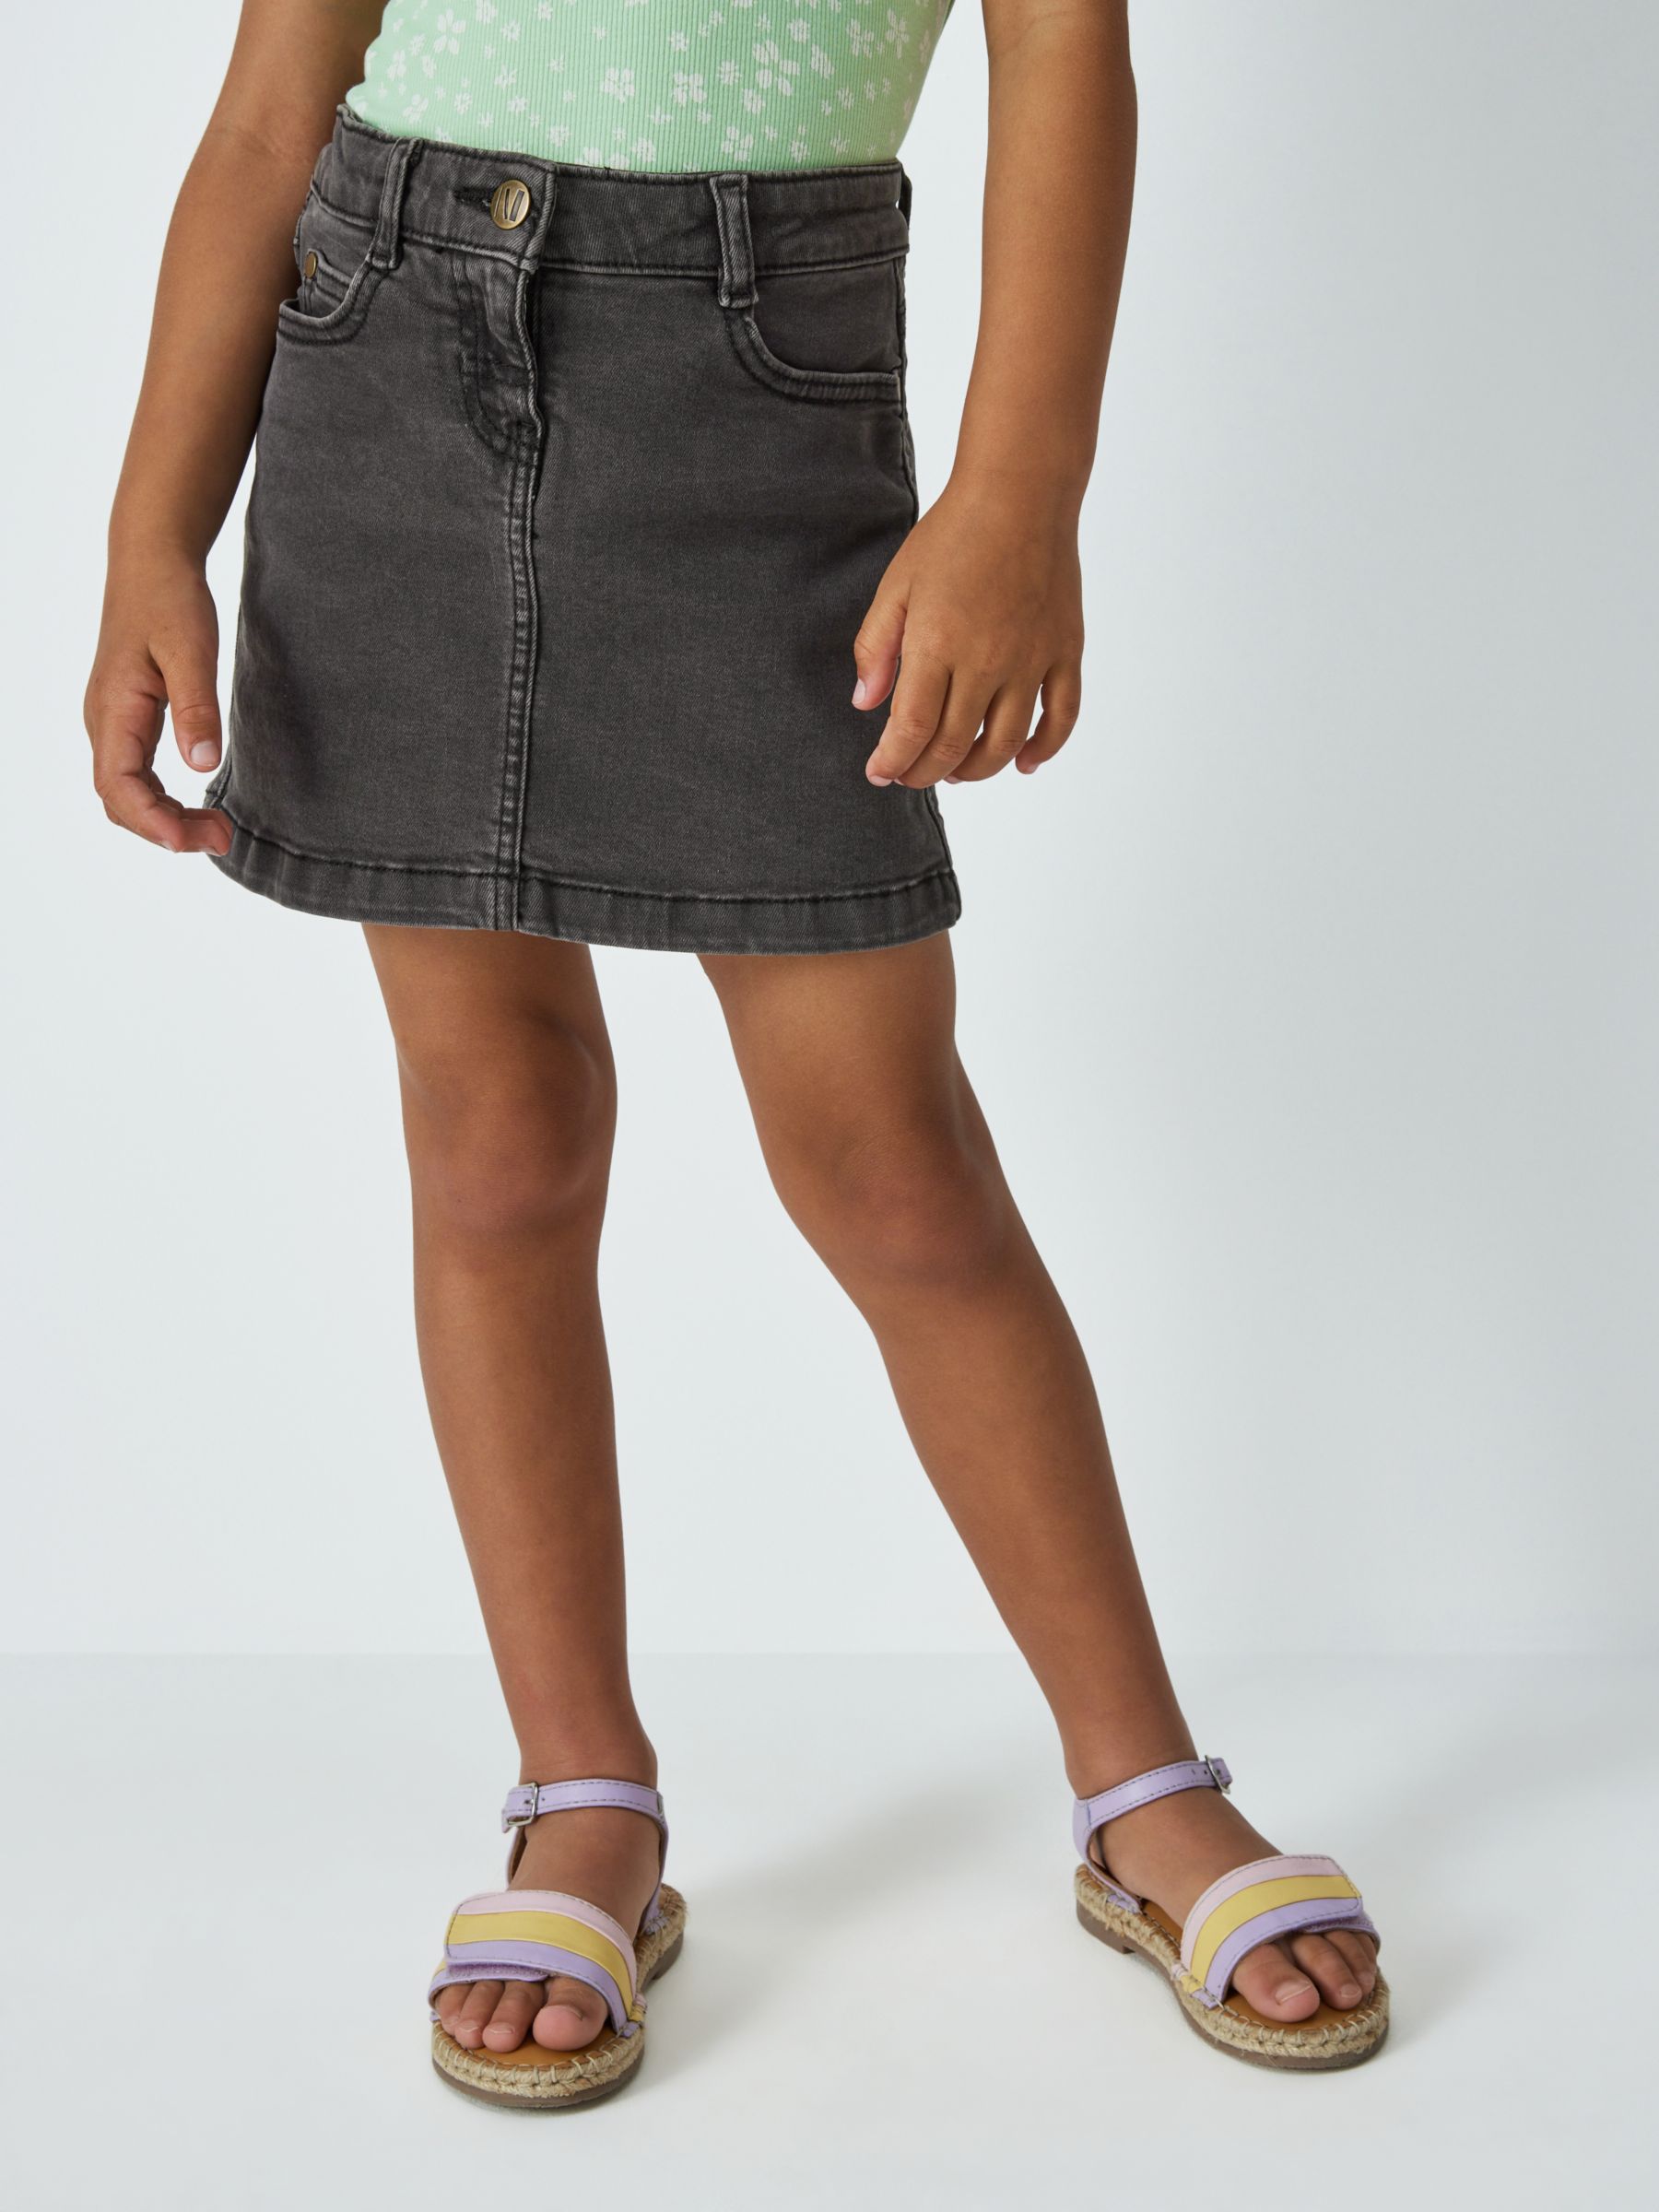 John Lewis Kids' Plain Denim Mini Skirt, Black, 14 years